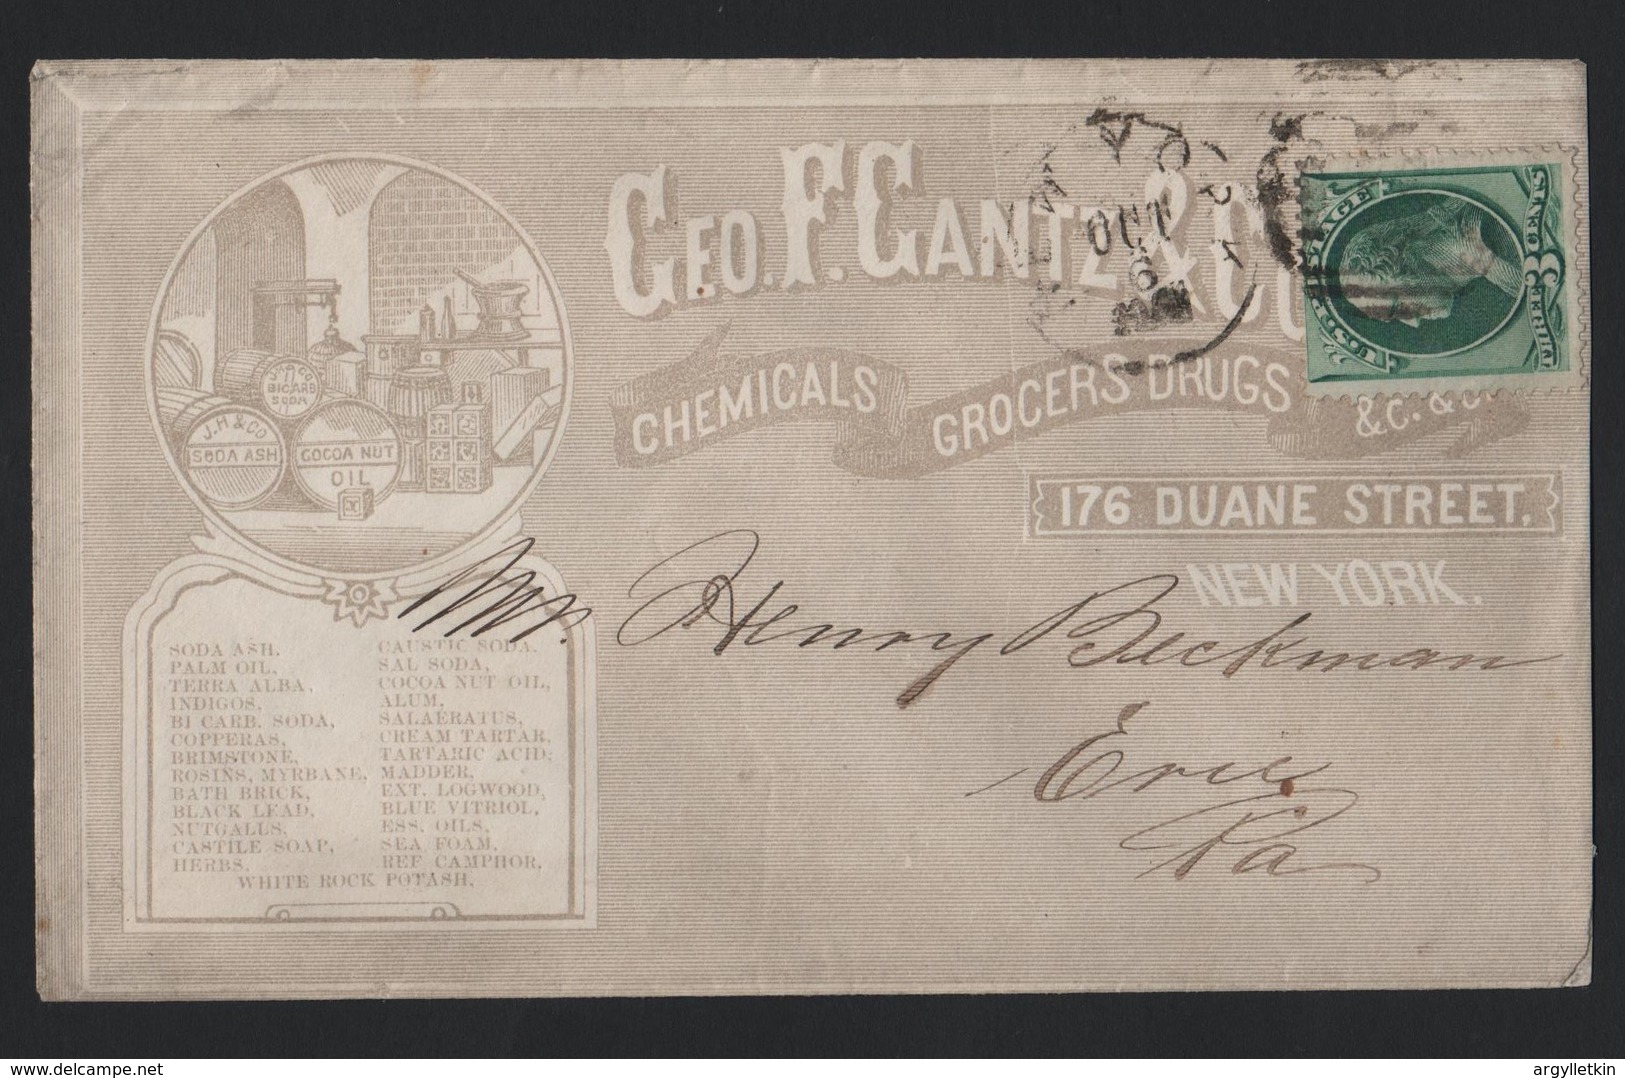 U.S.A. ADVERTISING NEW YORK GEO GANTZ CHEMICALS SODA SOAP COCONUT OIL 1870 - Souvenirkaarten